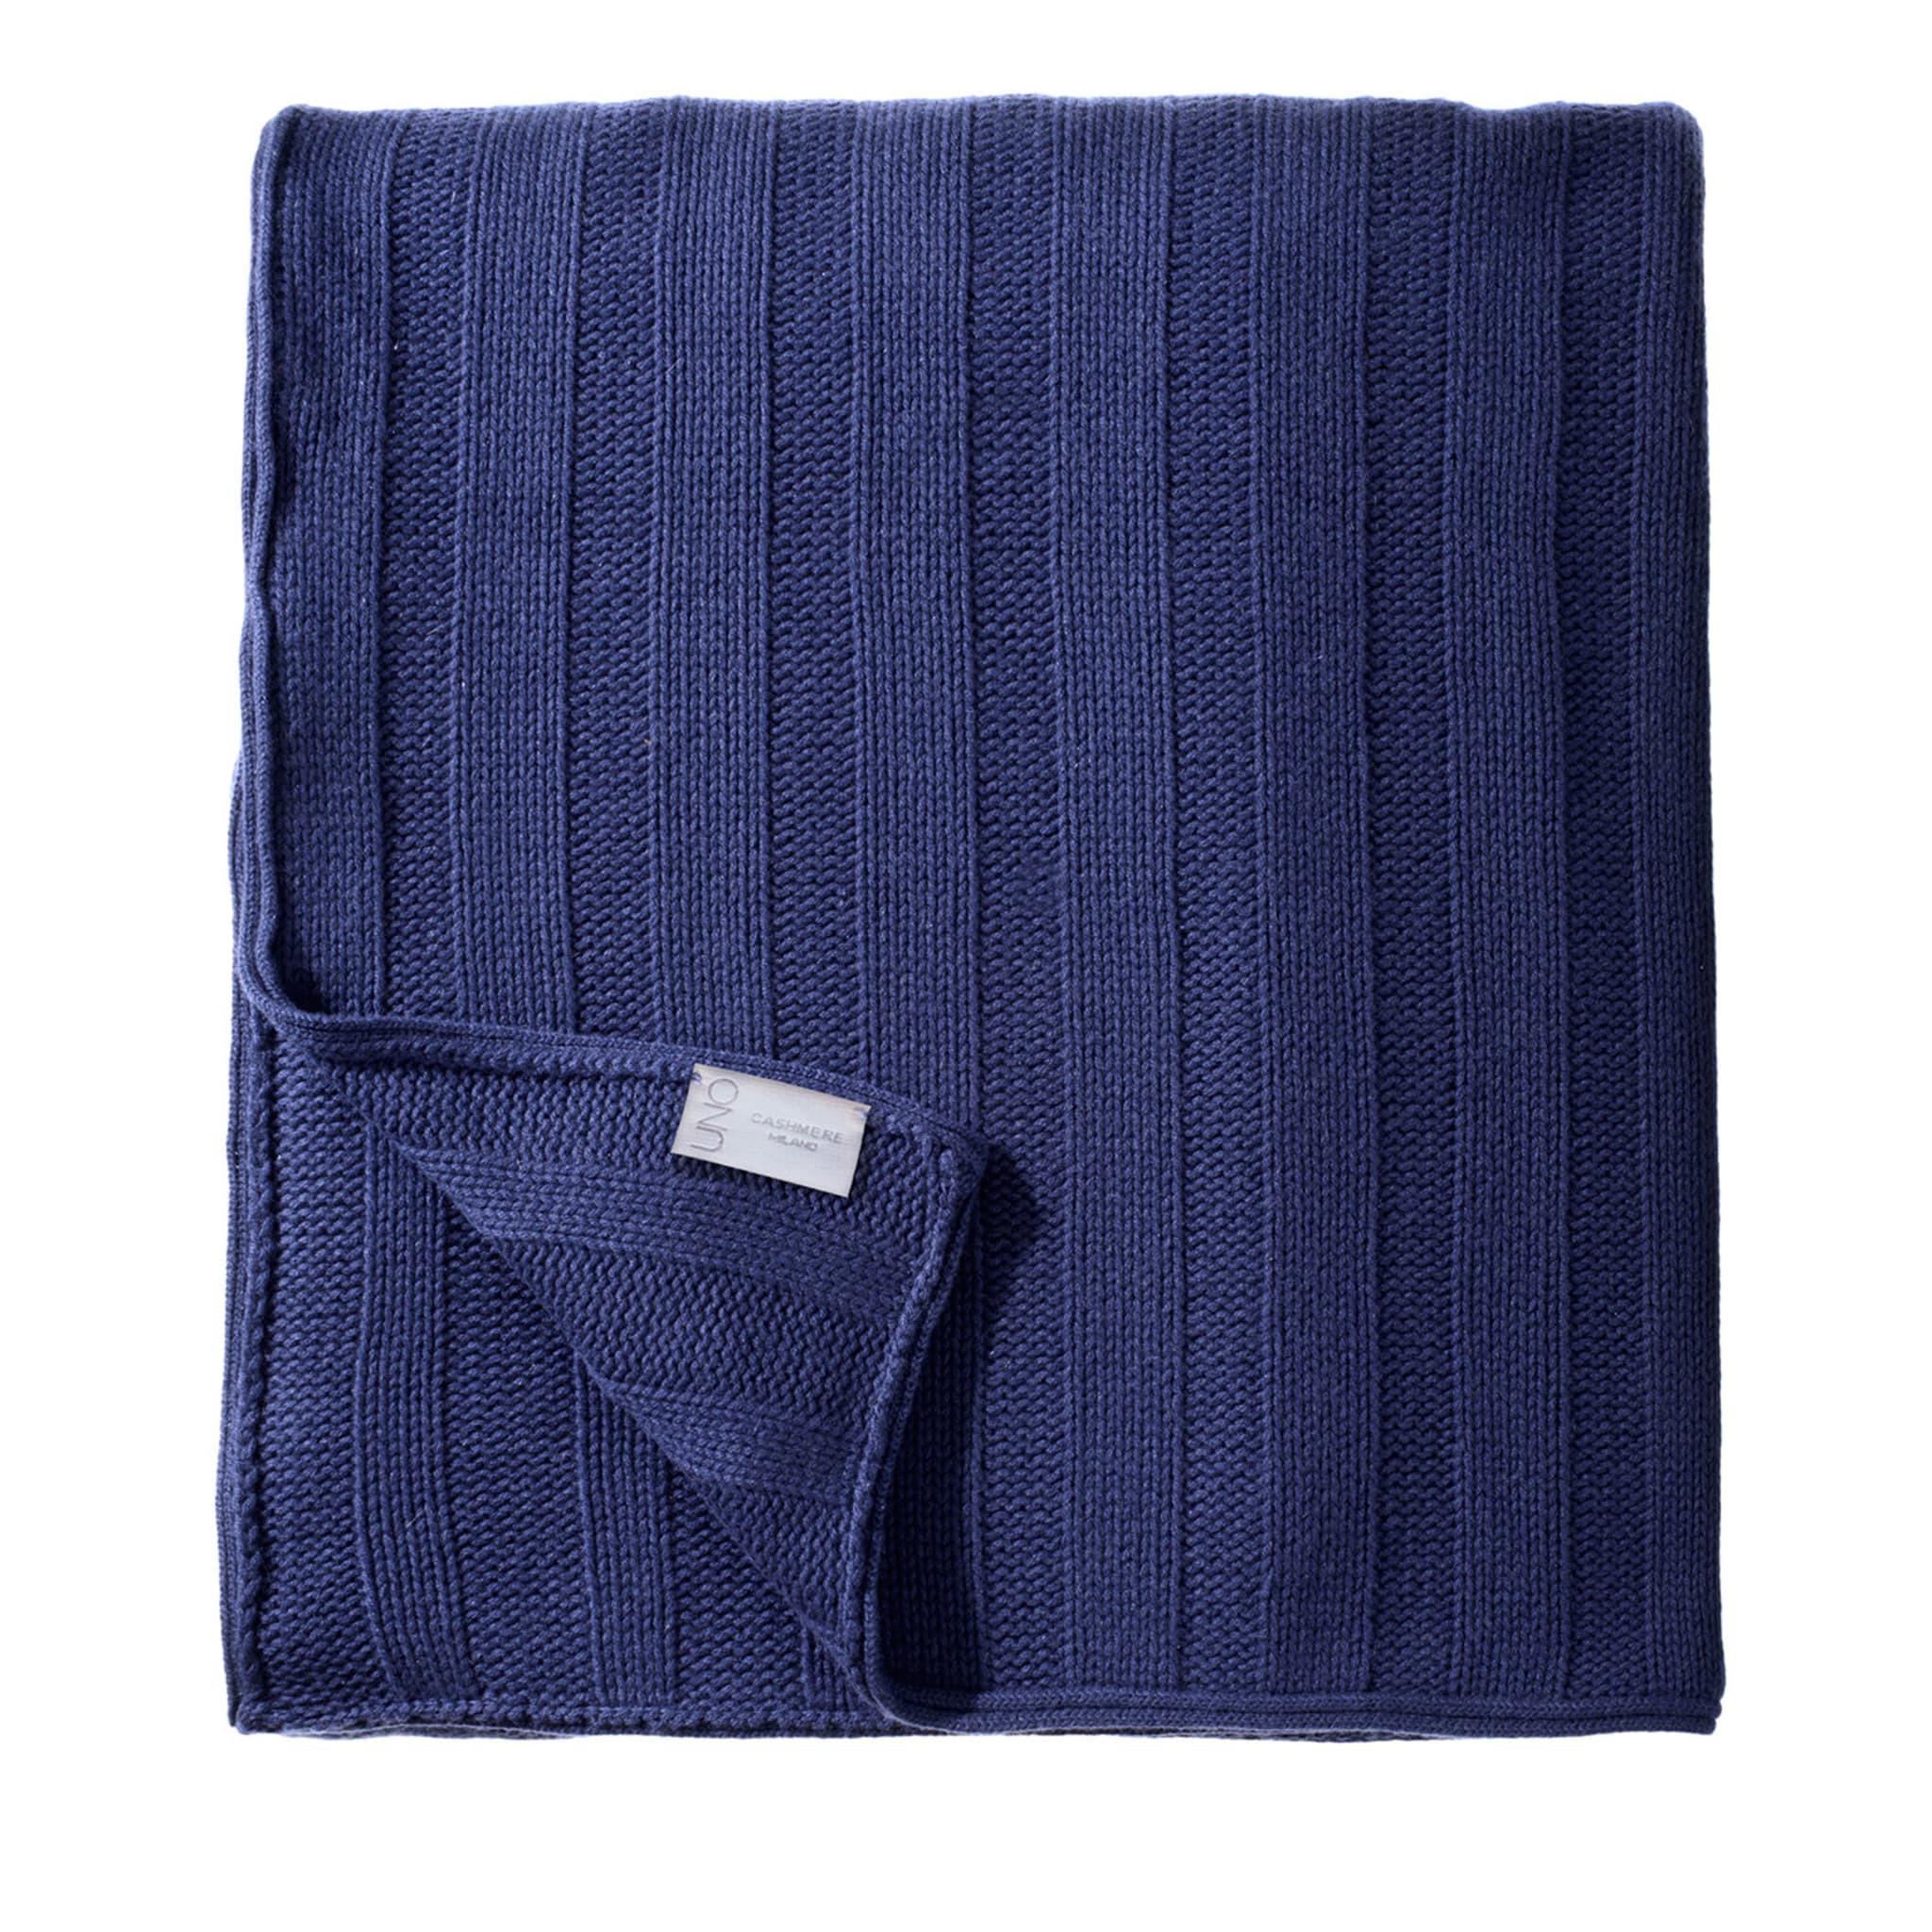 Large Blue Brioche Stitch Cashmere Blanket  #2 - Main view